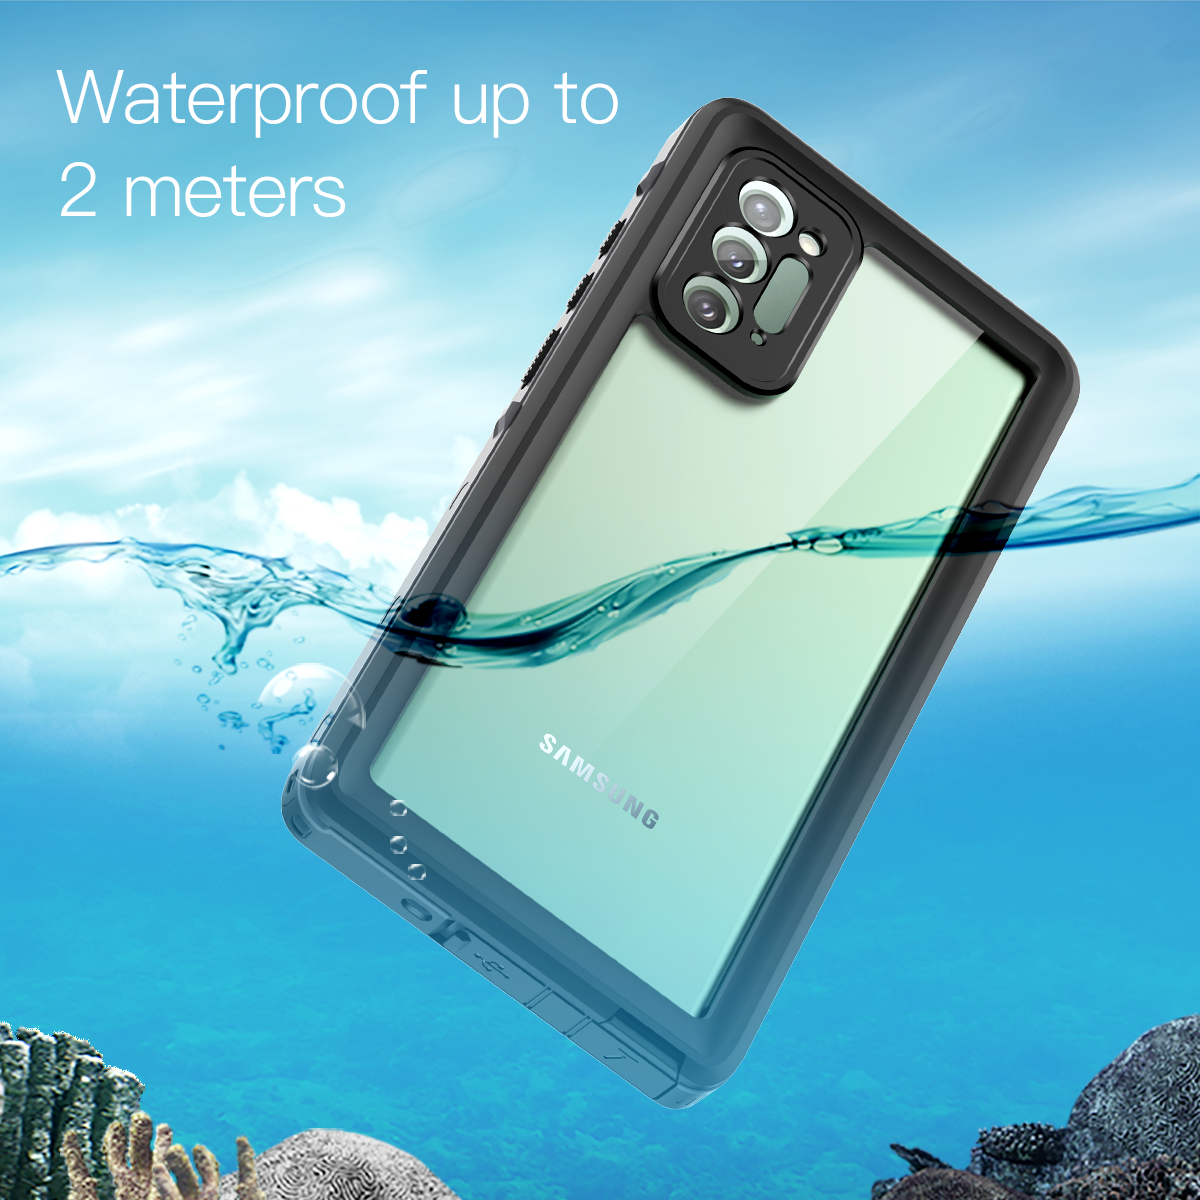 Samsung Galaxy note 20 waterproof case